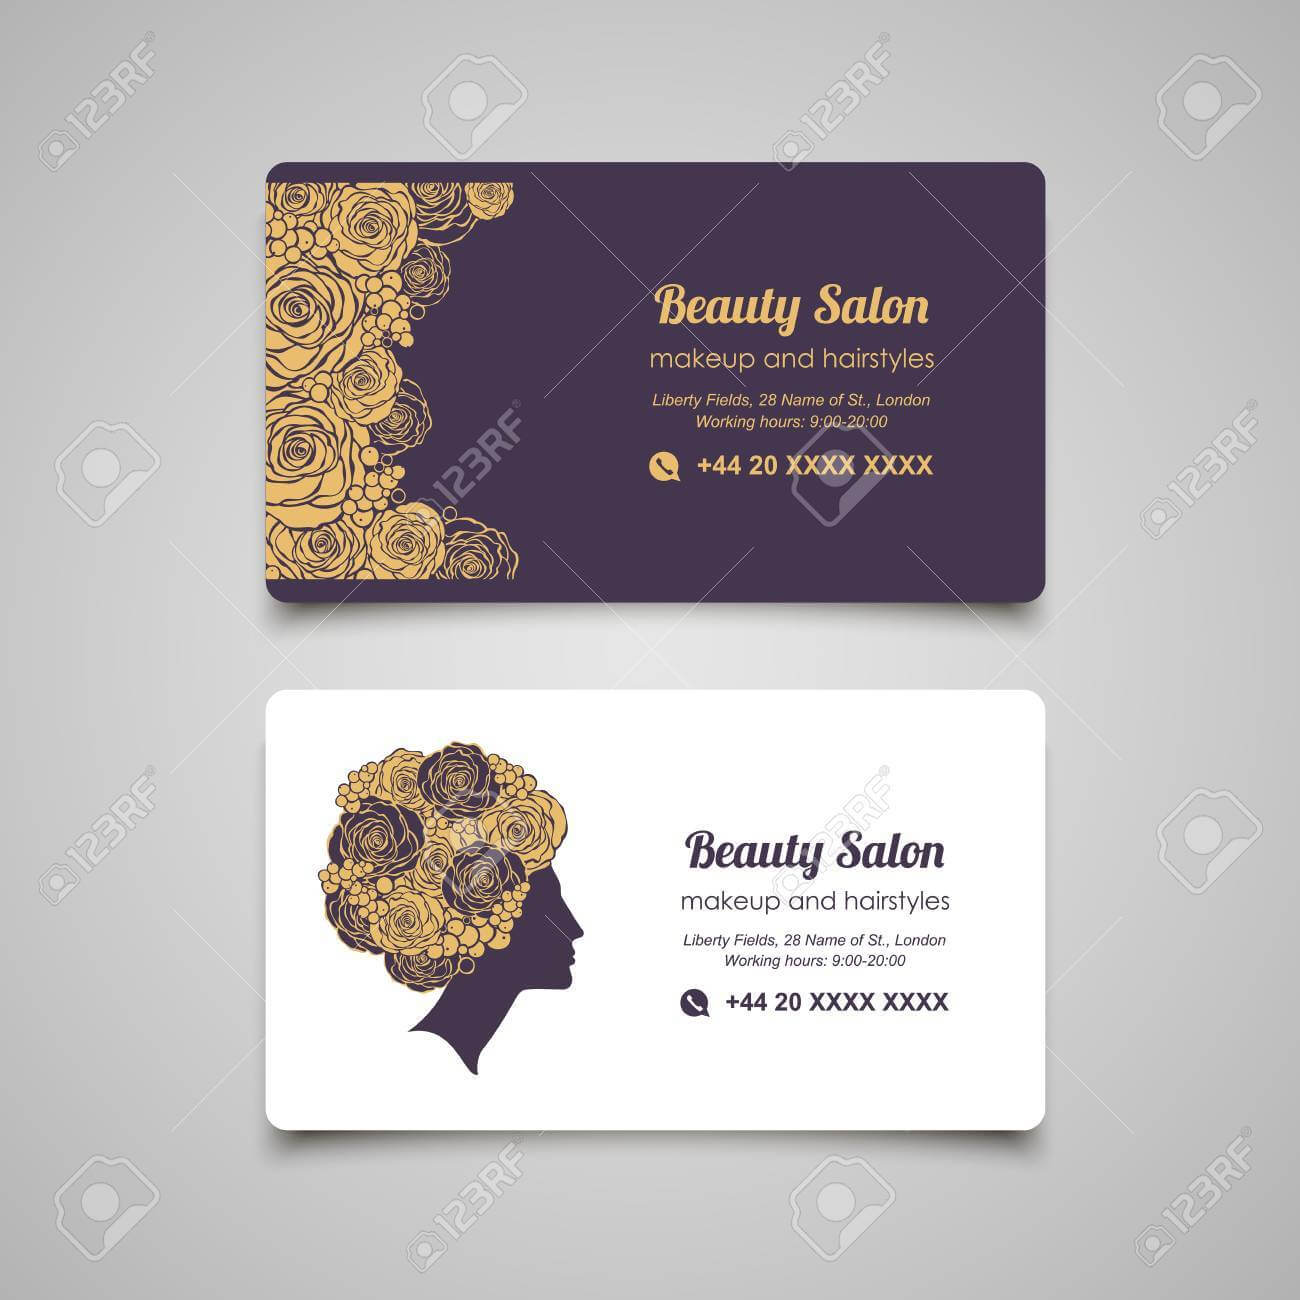 Beauty Salon Luxury Business Card Design Template With Beautiful.. Regarding Hair Salon Business Card Template